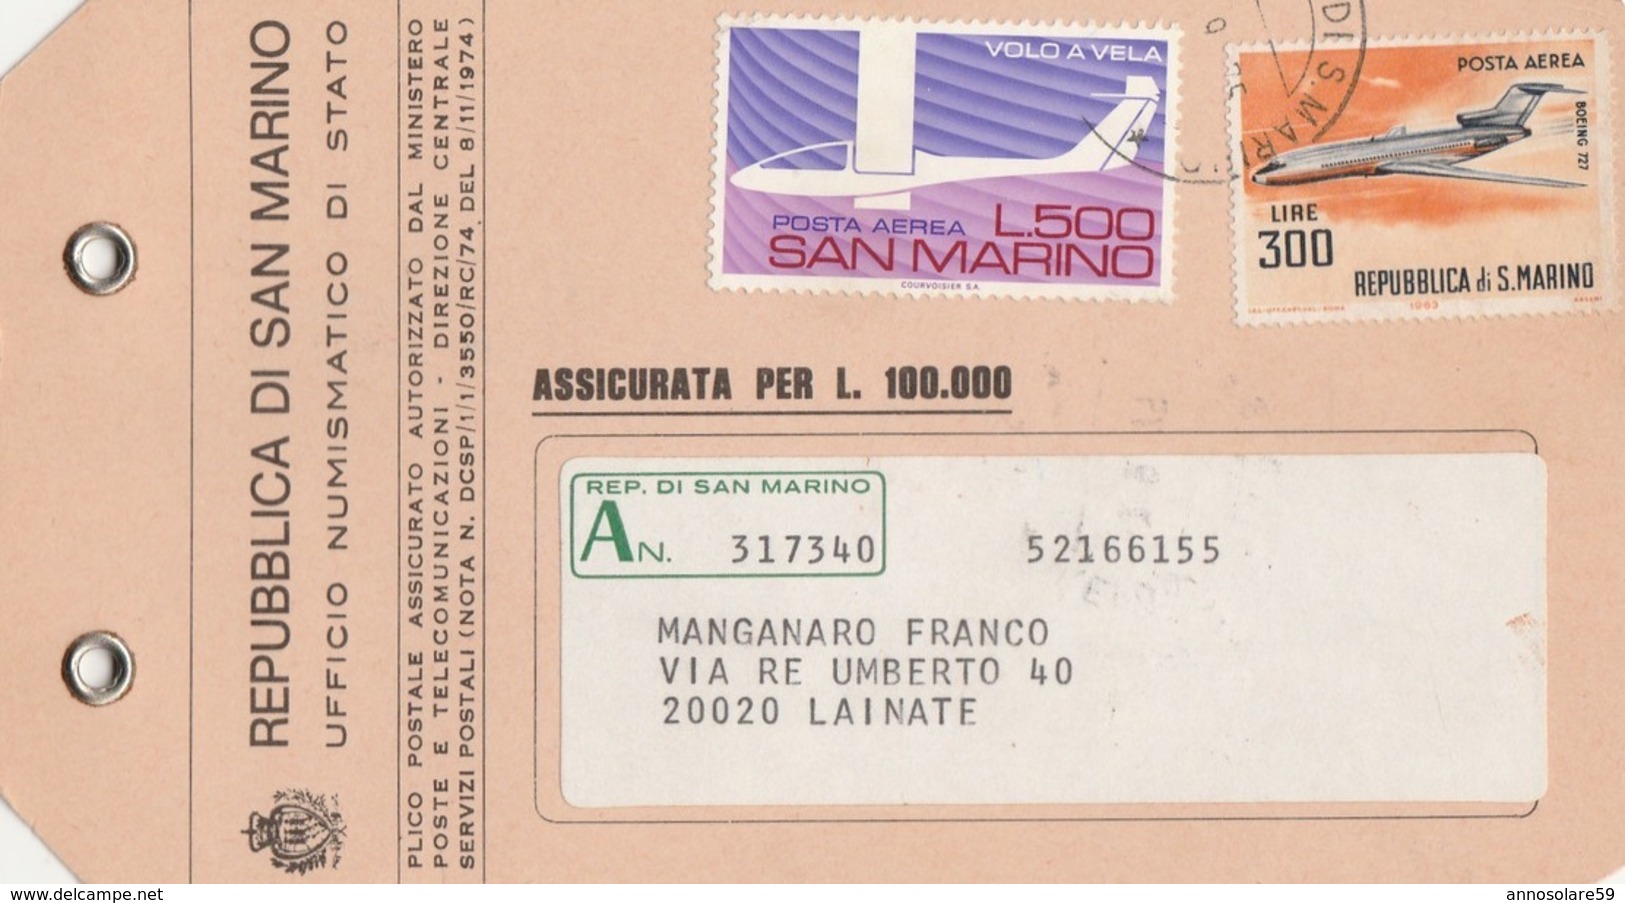 AIRPLANES - SAN MARINO - STORIA POSTALE - ETICHETTA PLICCO POSTALE - BELLISSIMA 1975 - LEGGI - Other Means Of Transport